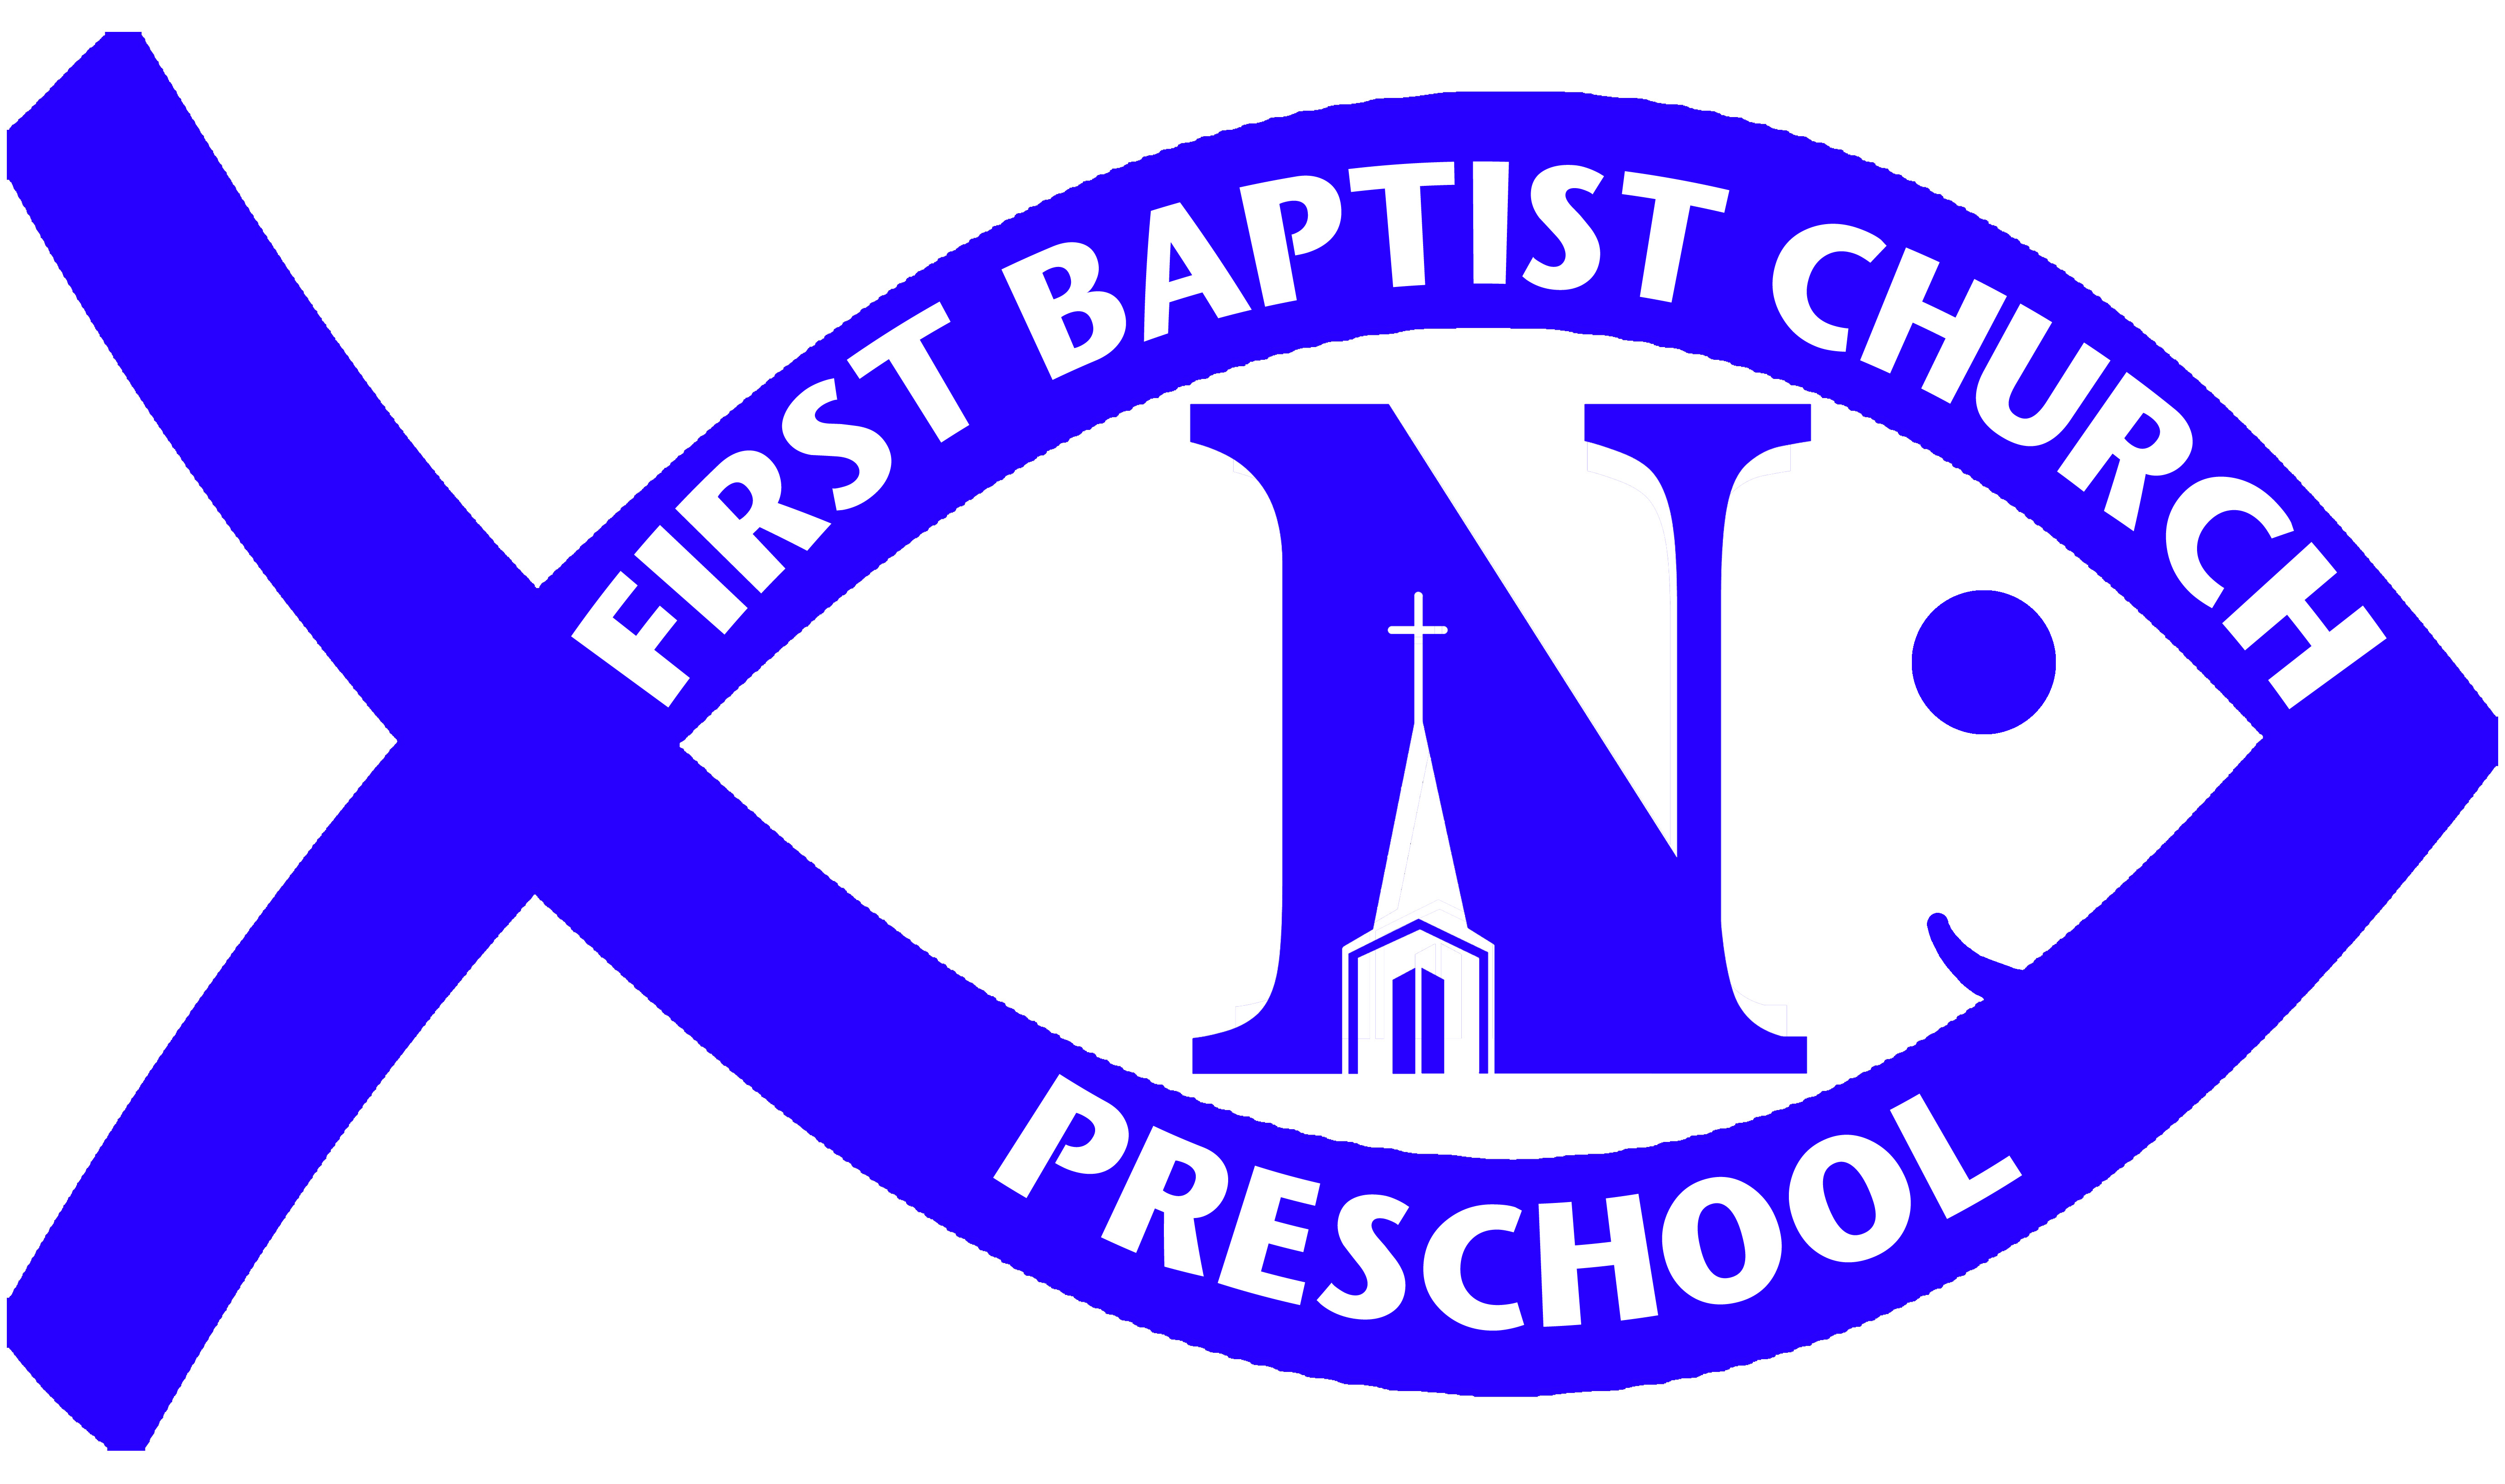 First Baptist Church Preschool Logo